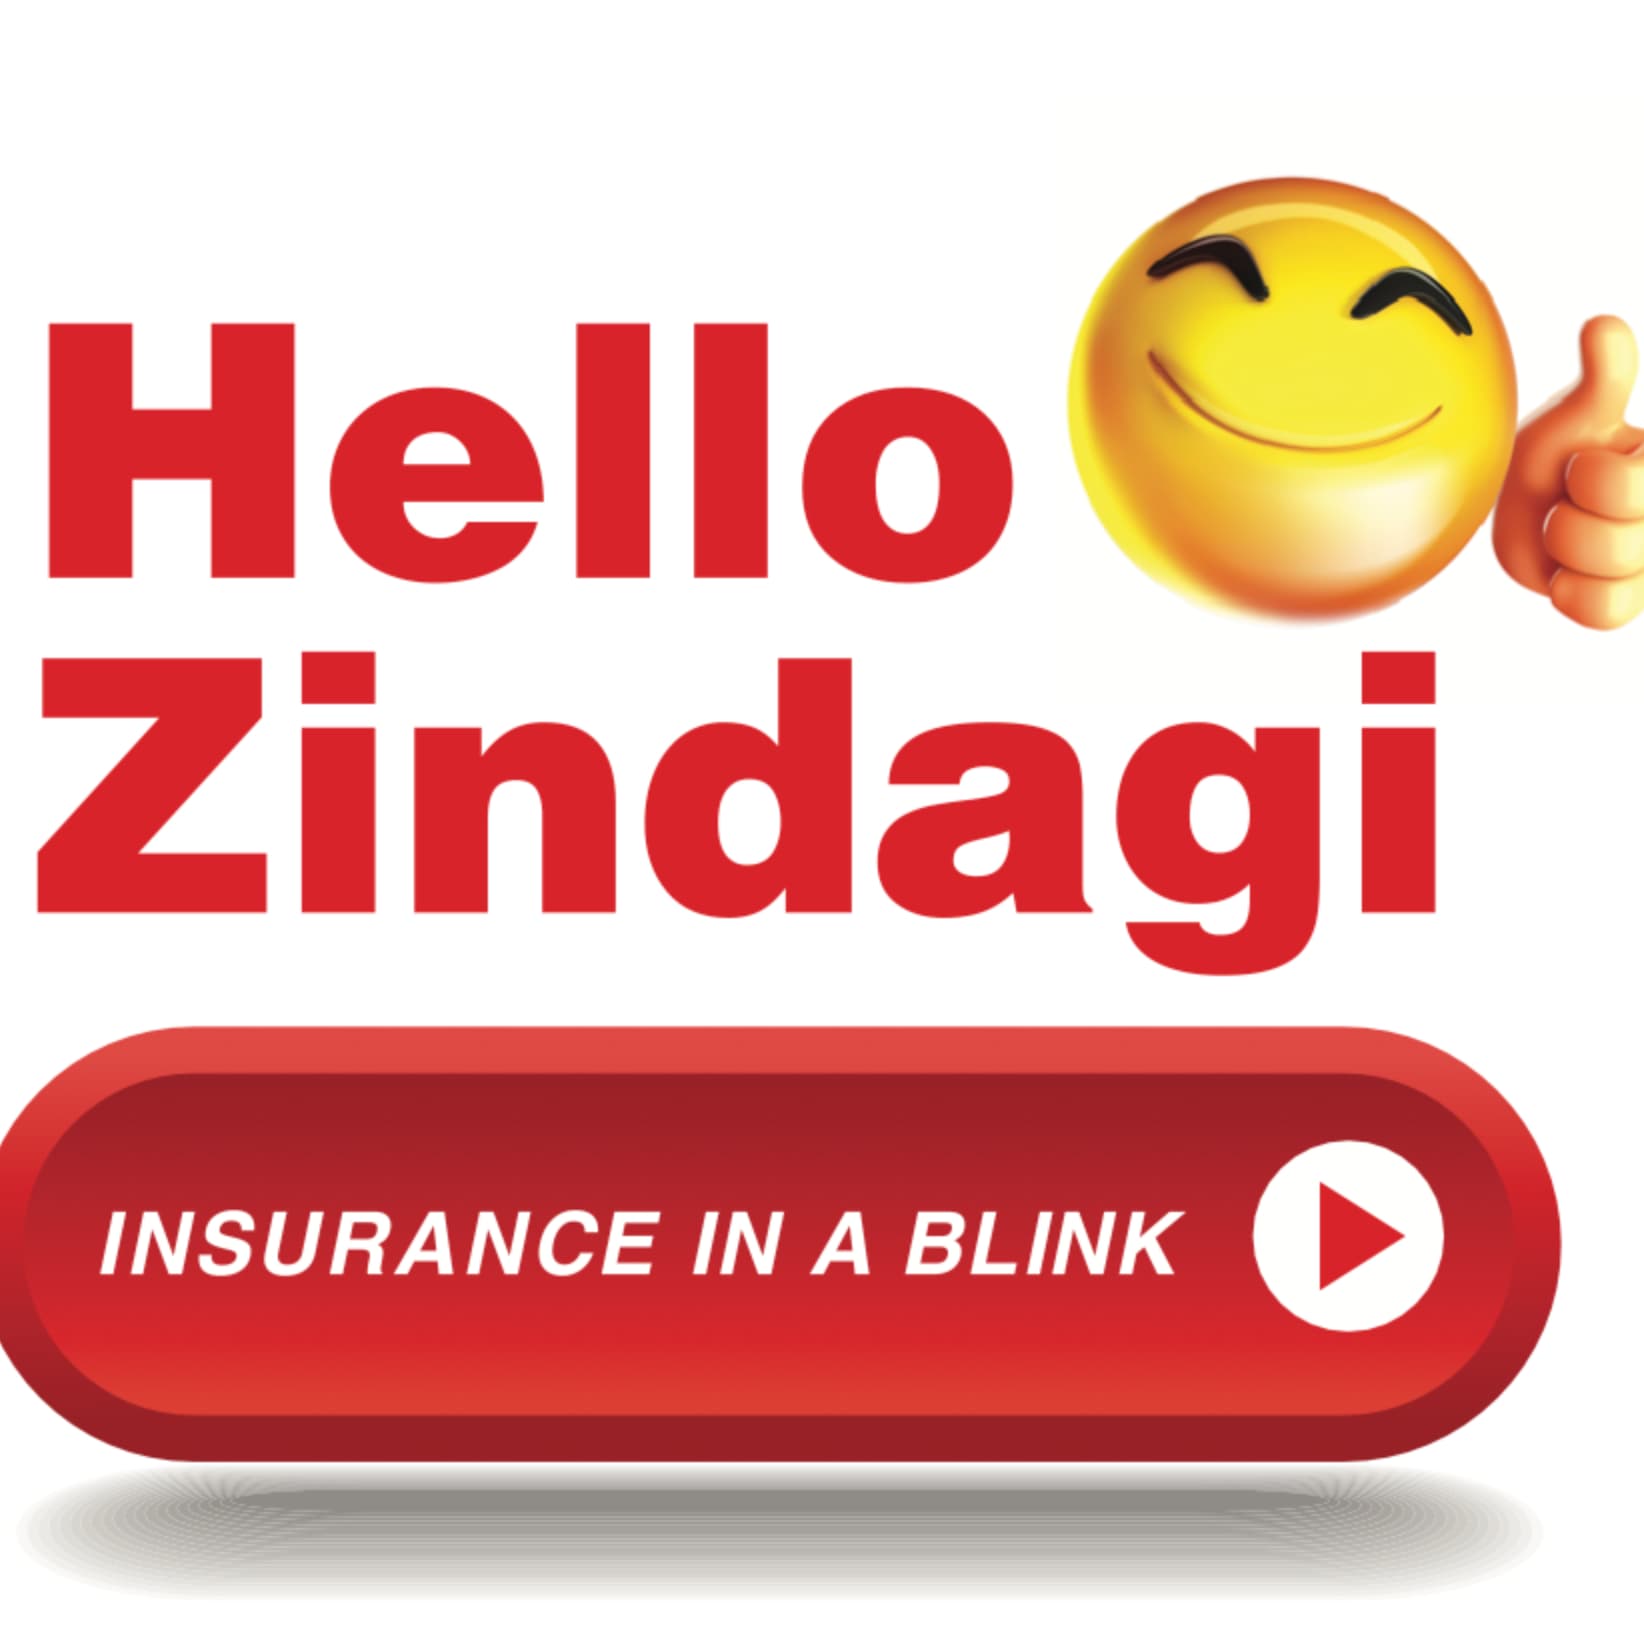 Hello Zindagi's logo